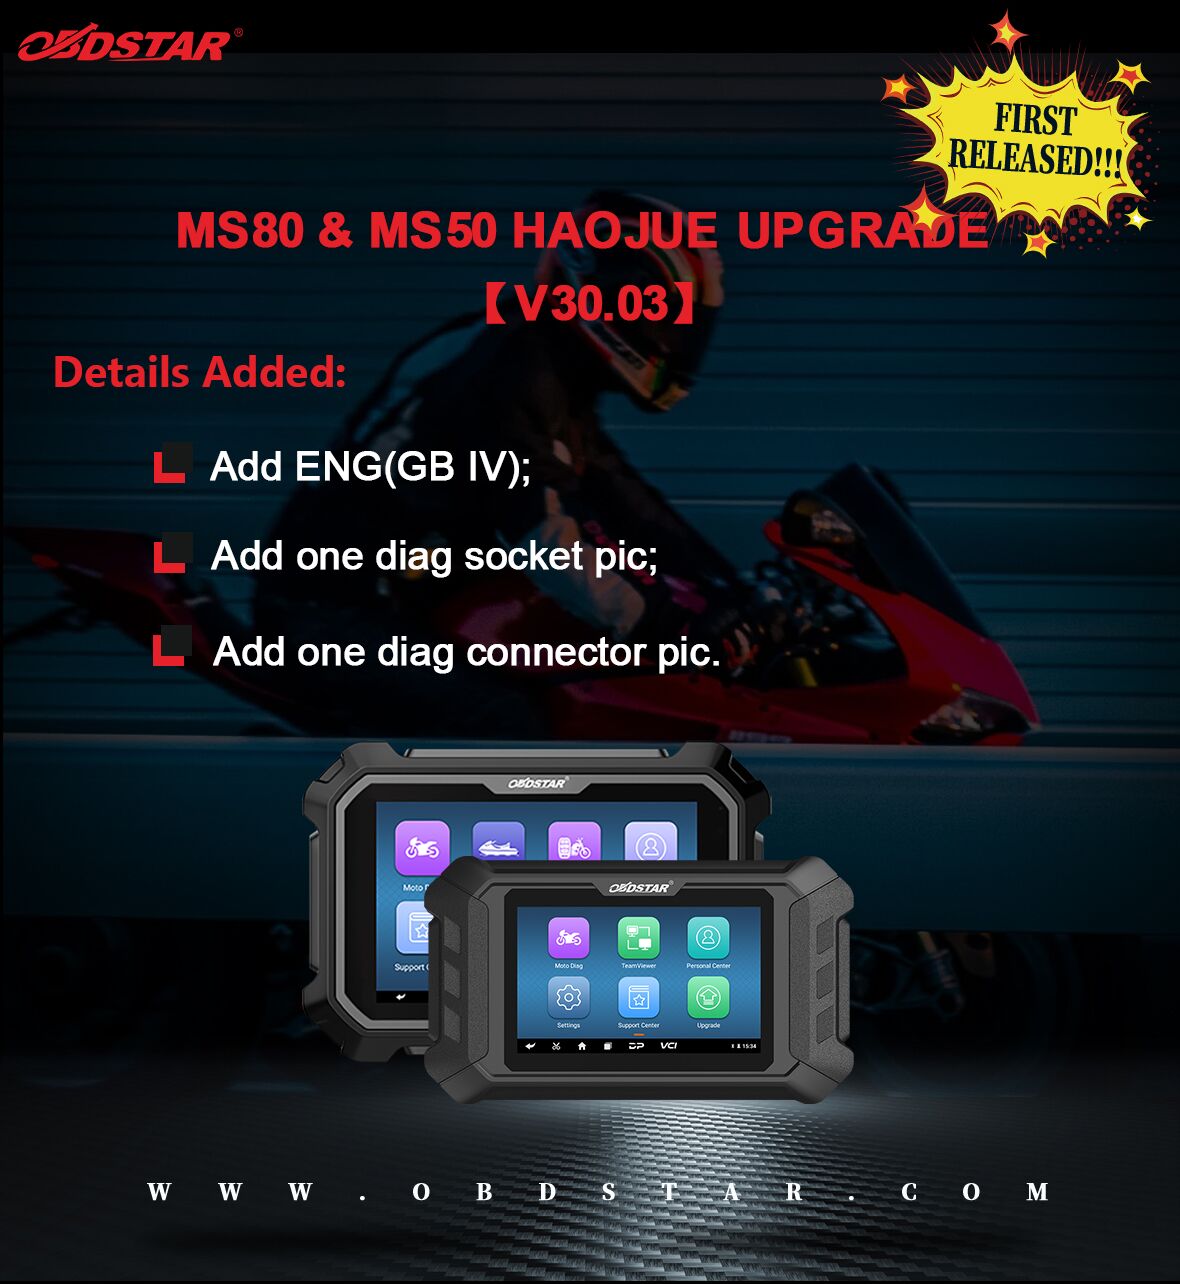 MS80 & MS50 HAOJUE UPGRADE (V30.03)